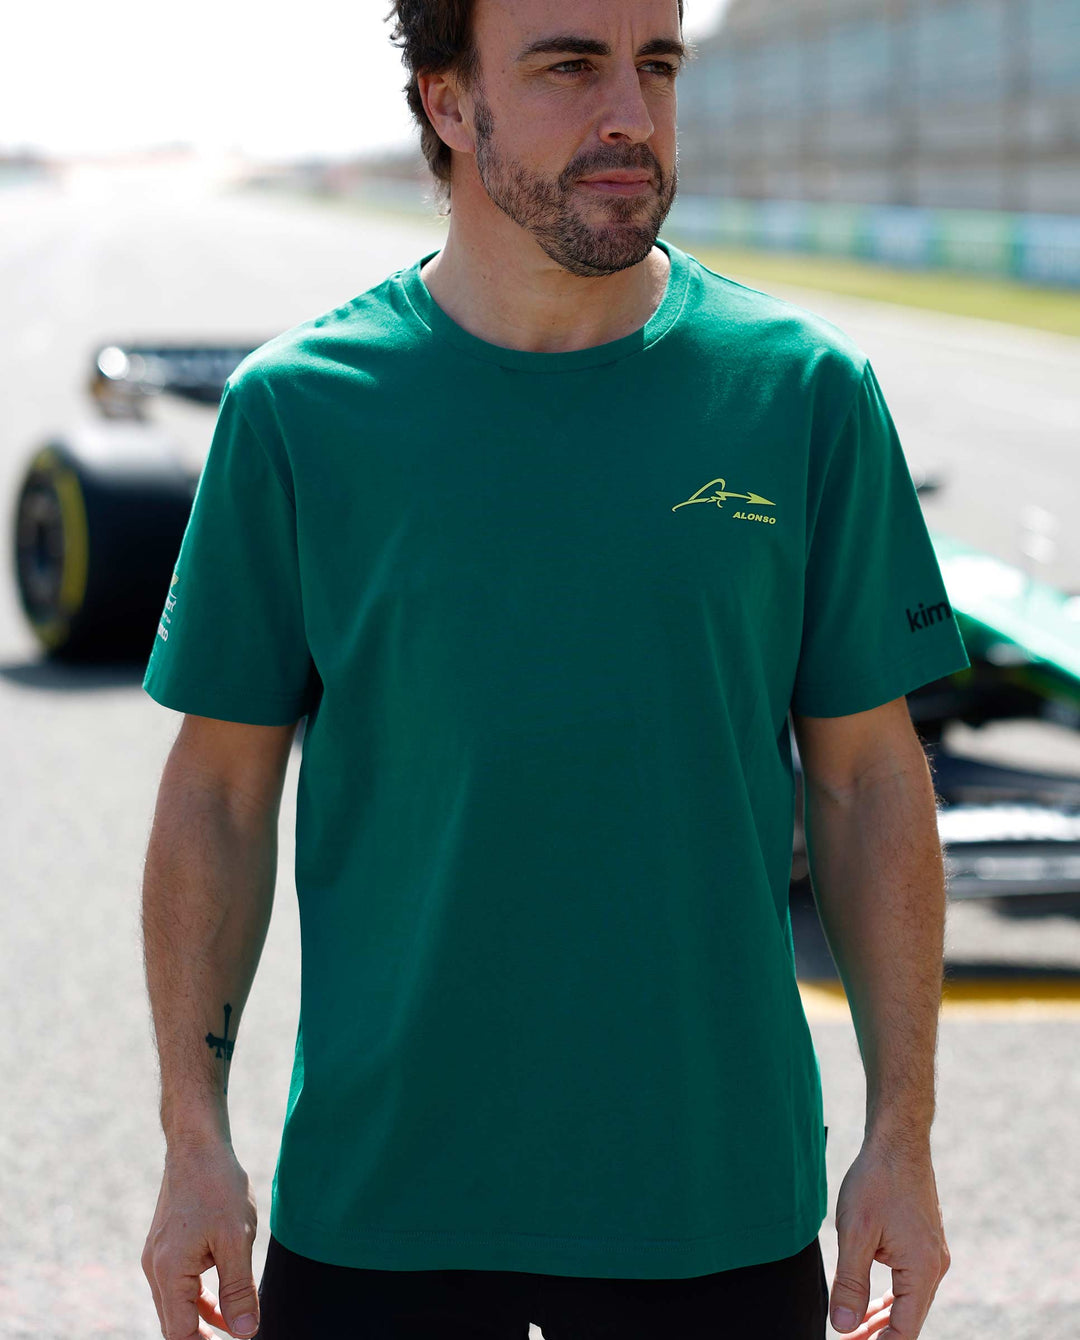 2023 Aston Martin F1™ Lifestyle Fernando Alonso Special Edition T-shirt - Green